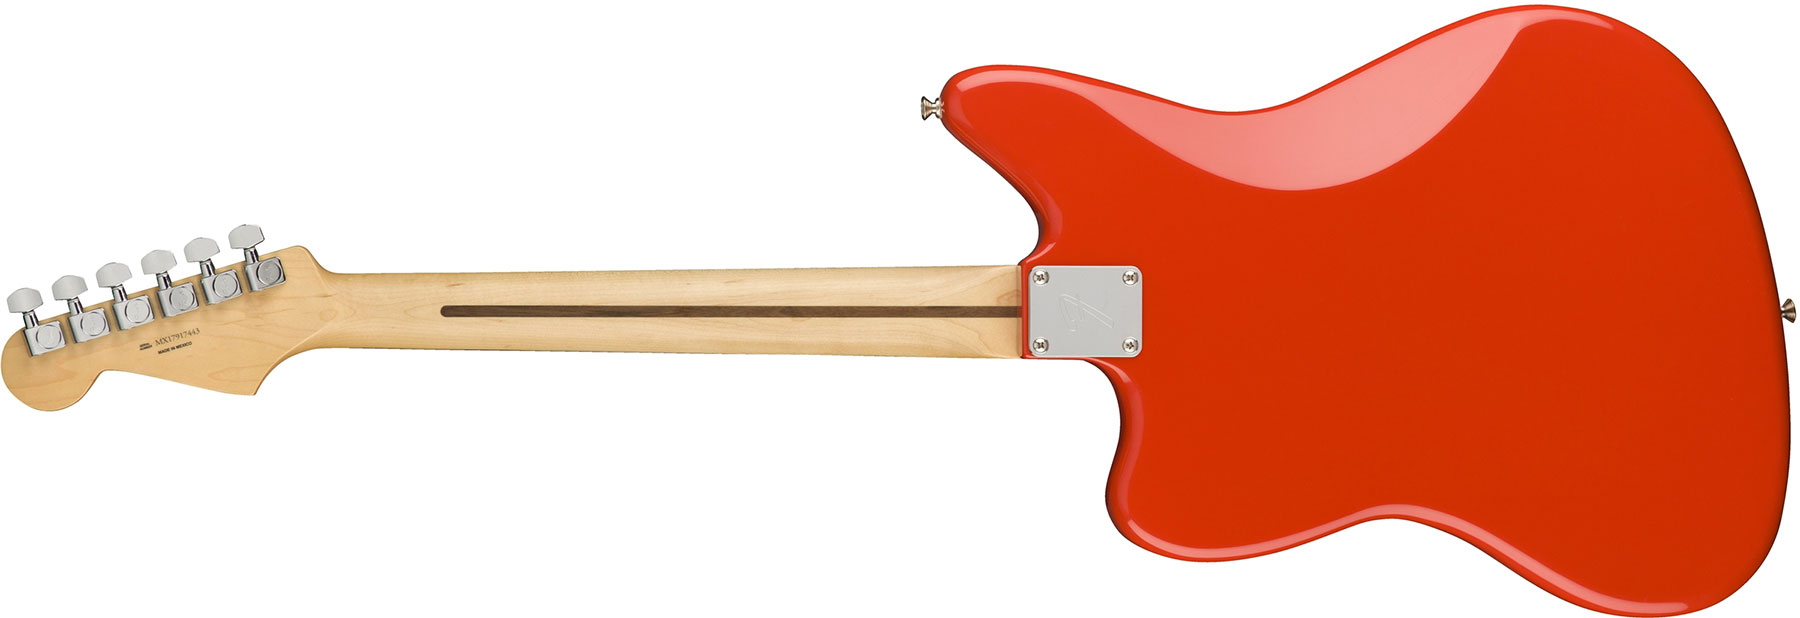 Fender Jaguar Player Mex Hs Pf - Sonic Red - Retro-rock elektrische gitaar - Variation 1